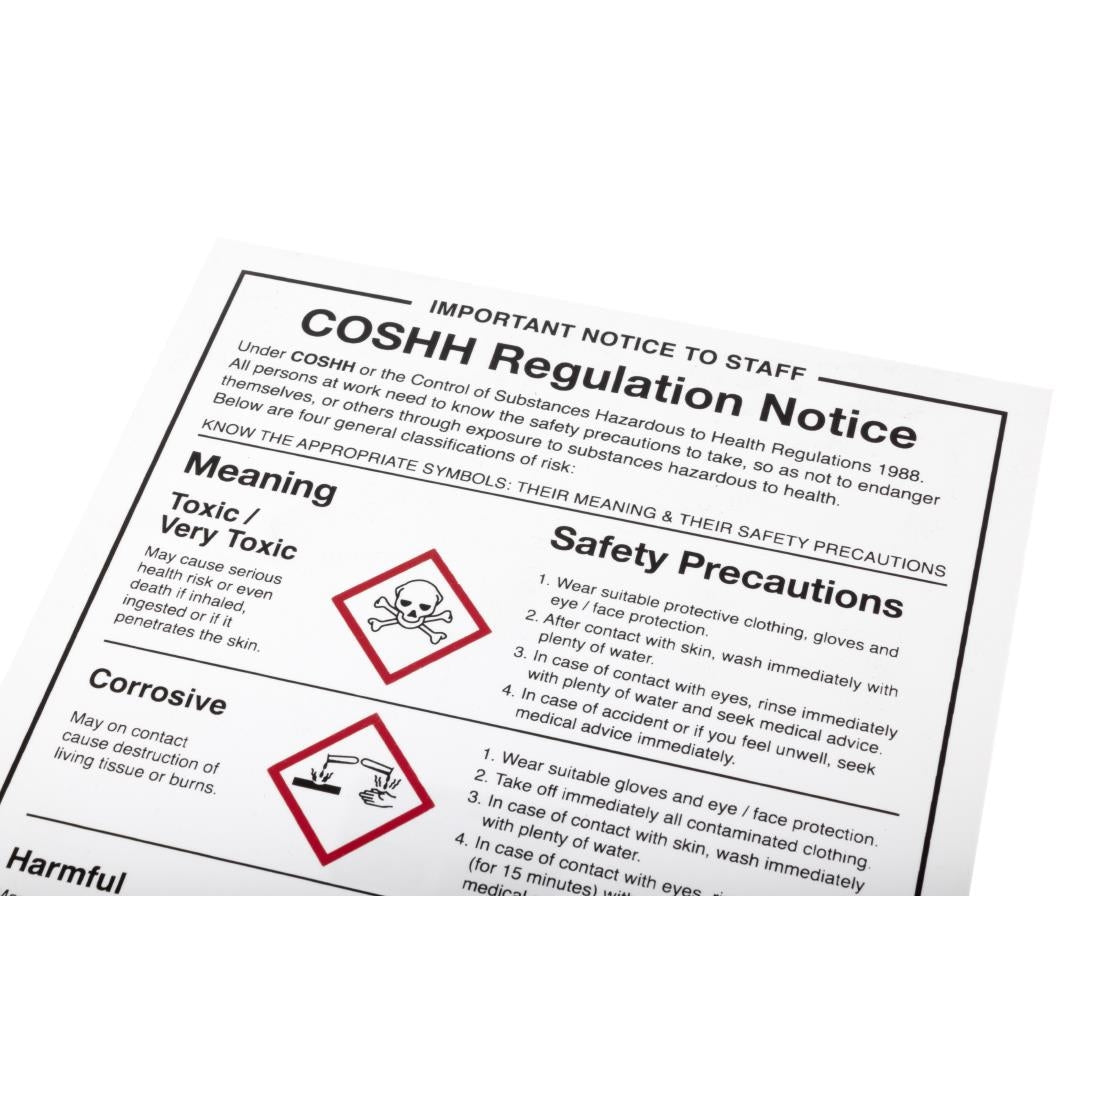 COSHH Regulations Sign JD Catering Equipment Solutions Ltd